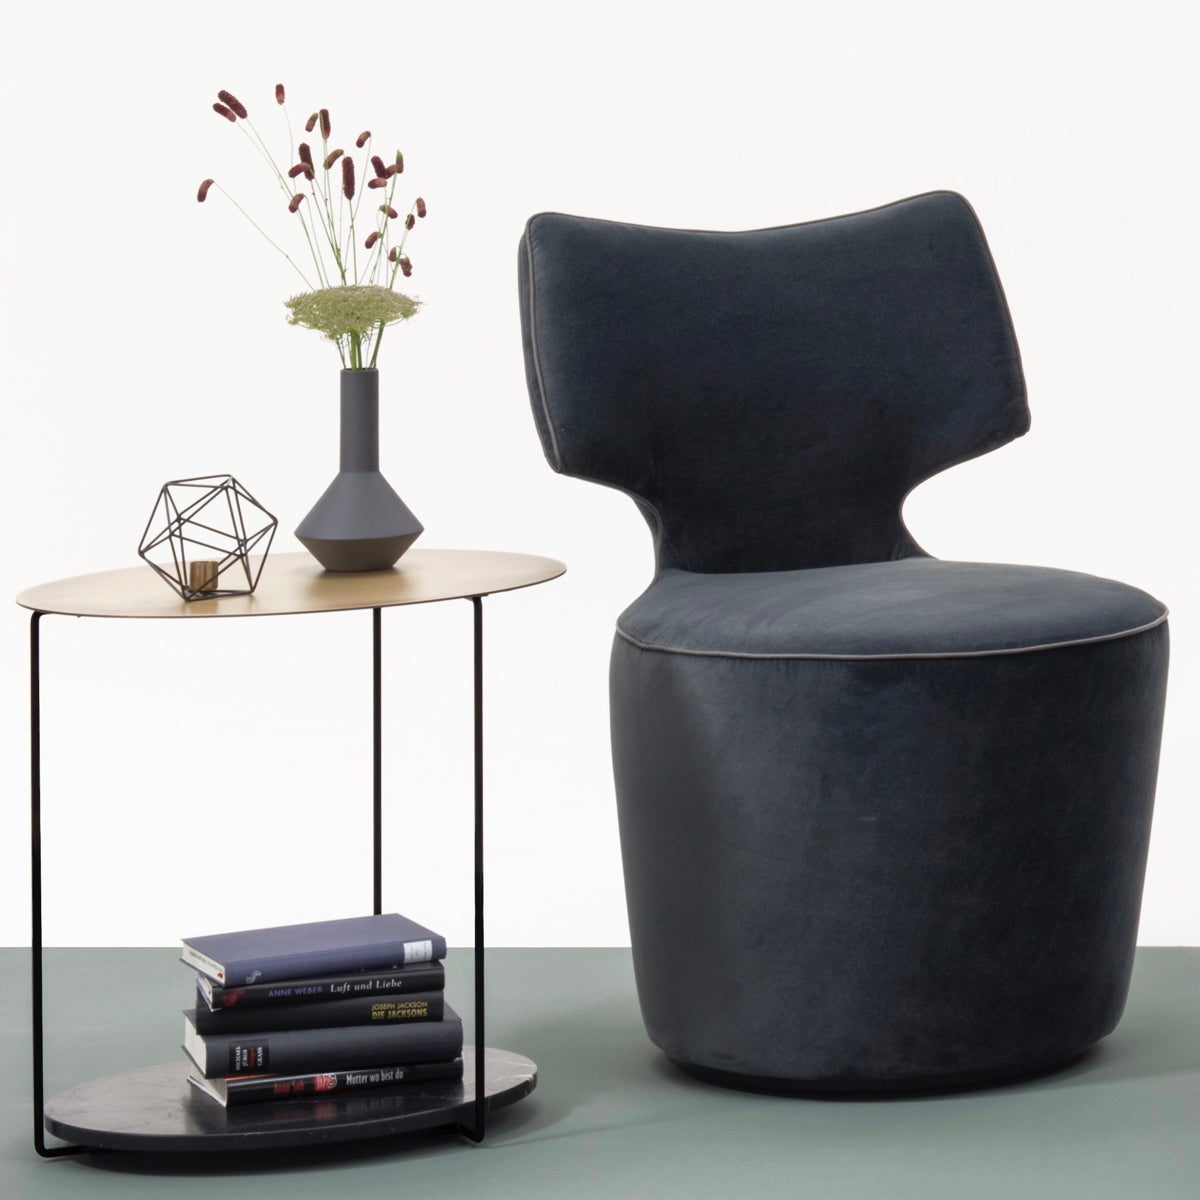 German Designer Furniture UK - Christine Kröncke Interior Design